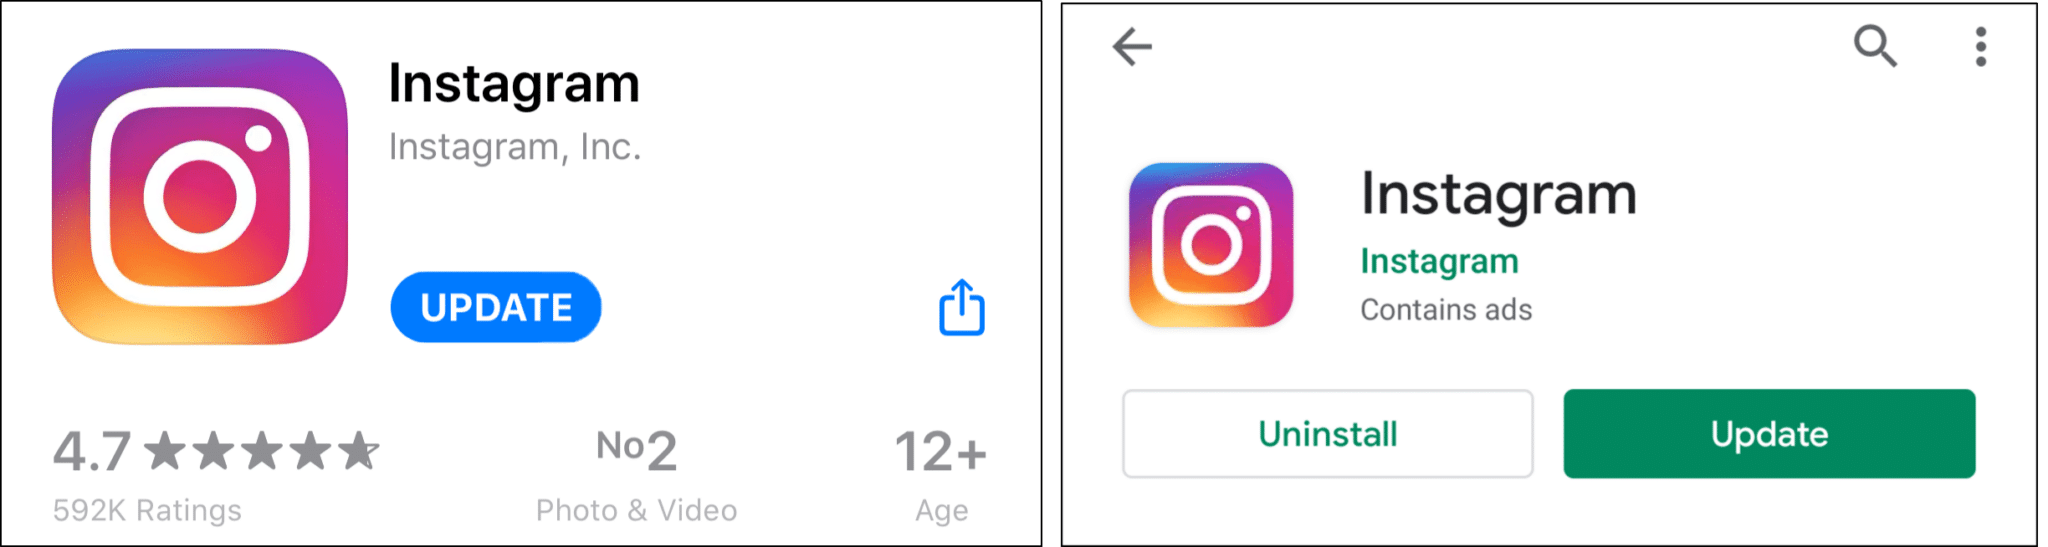 Update Instagram app to fix Instagram Stories not uploading, stuck posting or the "Upload Failed" error message